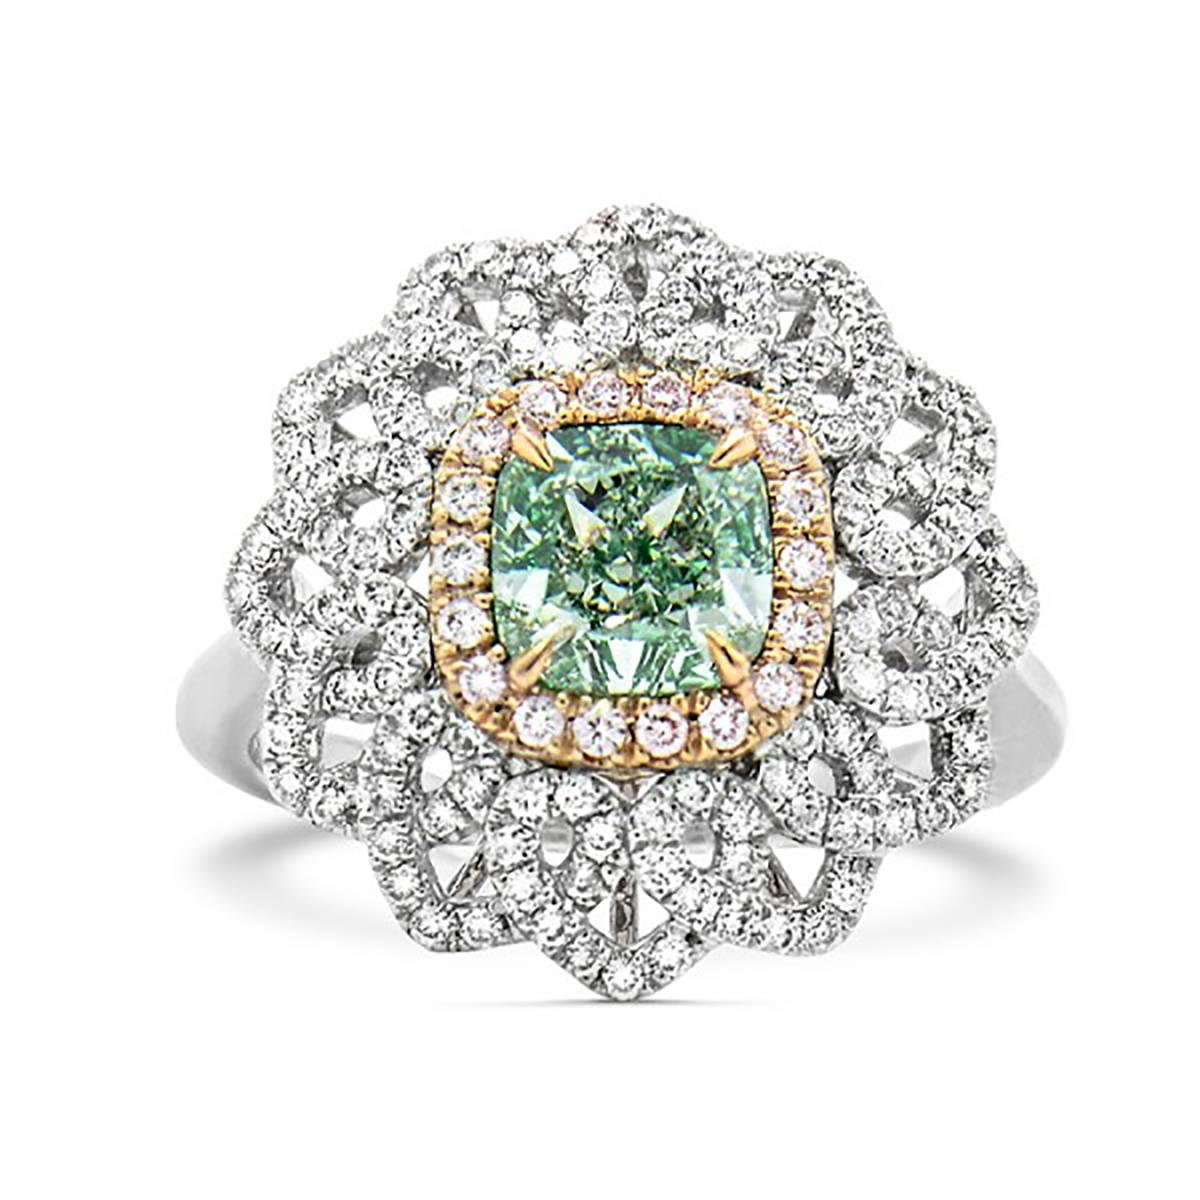 Stunning Natural Color Green Diamond Ring in 18 Karat Gold 2